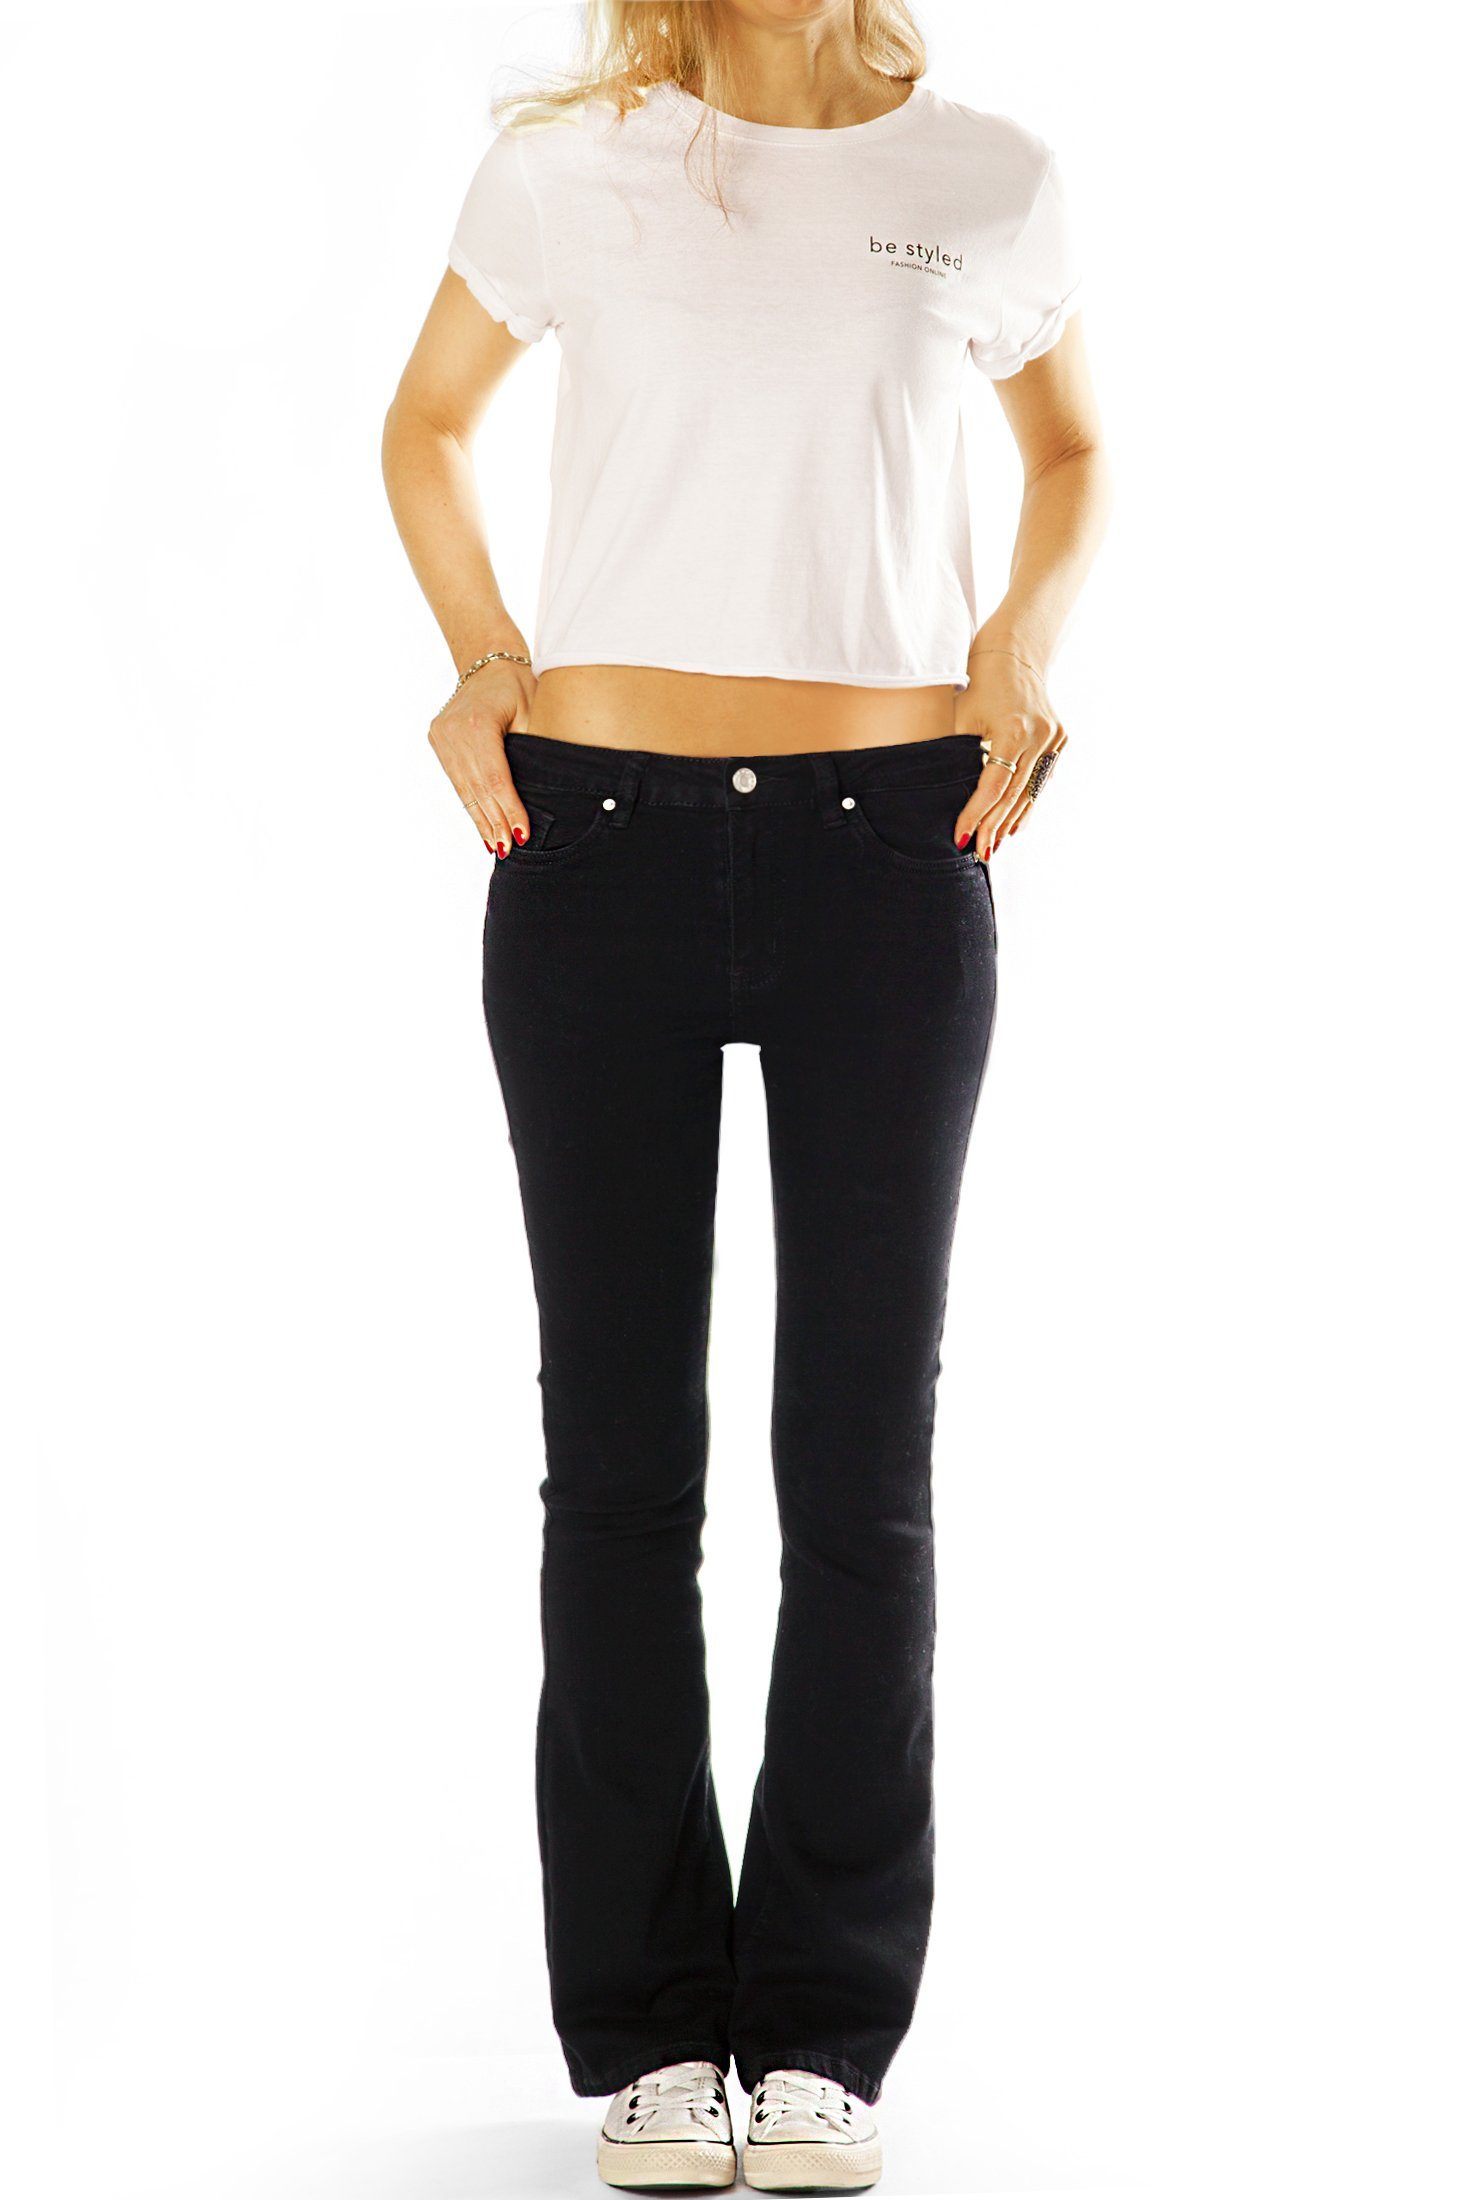 be styled Waist Basic waist, j2L-1 5-Pocket-Style, im Medium Schlag Damen Cut stretchig Stretch-Anteil, Boot Bootcut-Jeans Hose Jeans bequem, mit - medium